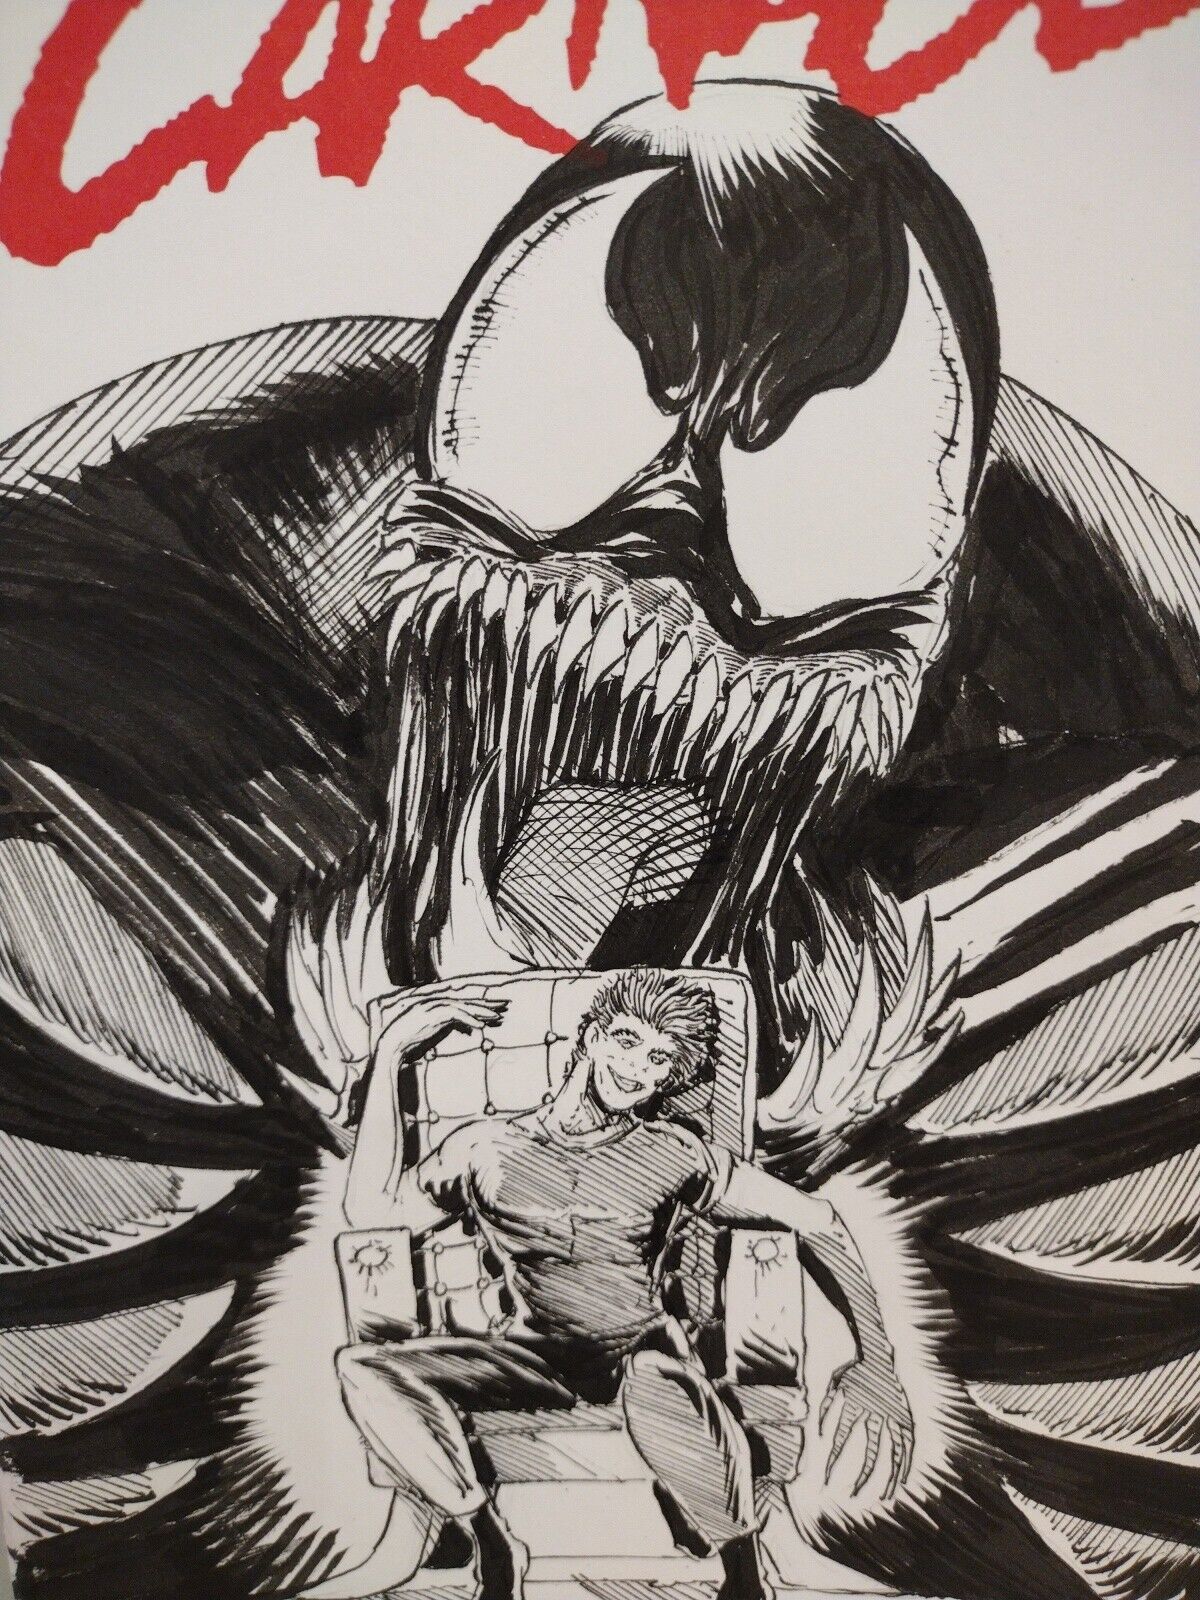 ABSOLUTE CARNAGE #1 Blank Sketch Variant Cover Comic W Original Dcastr Venom Art